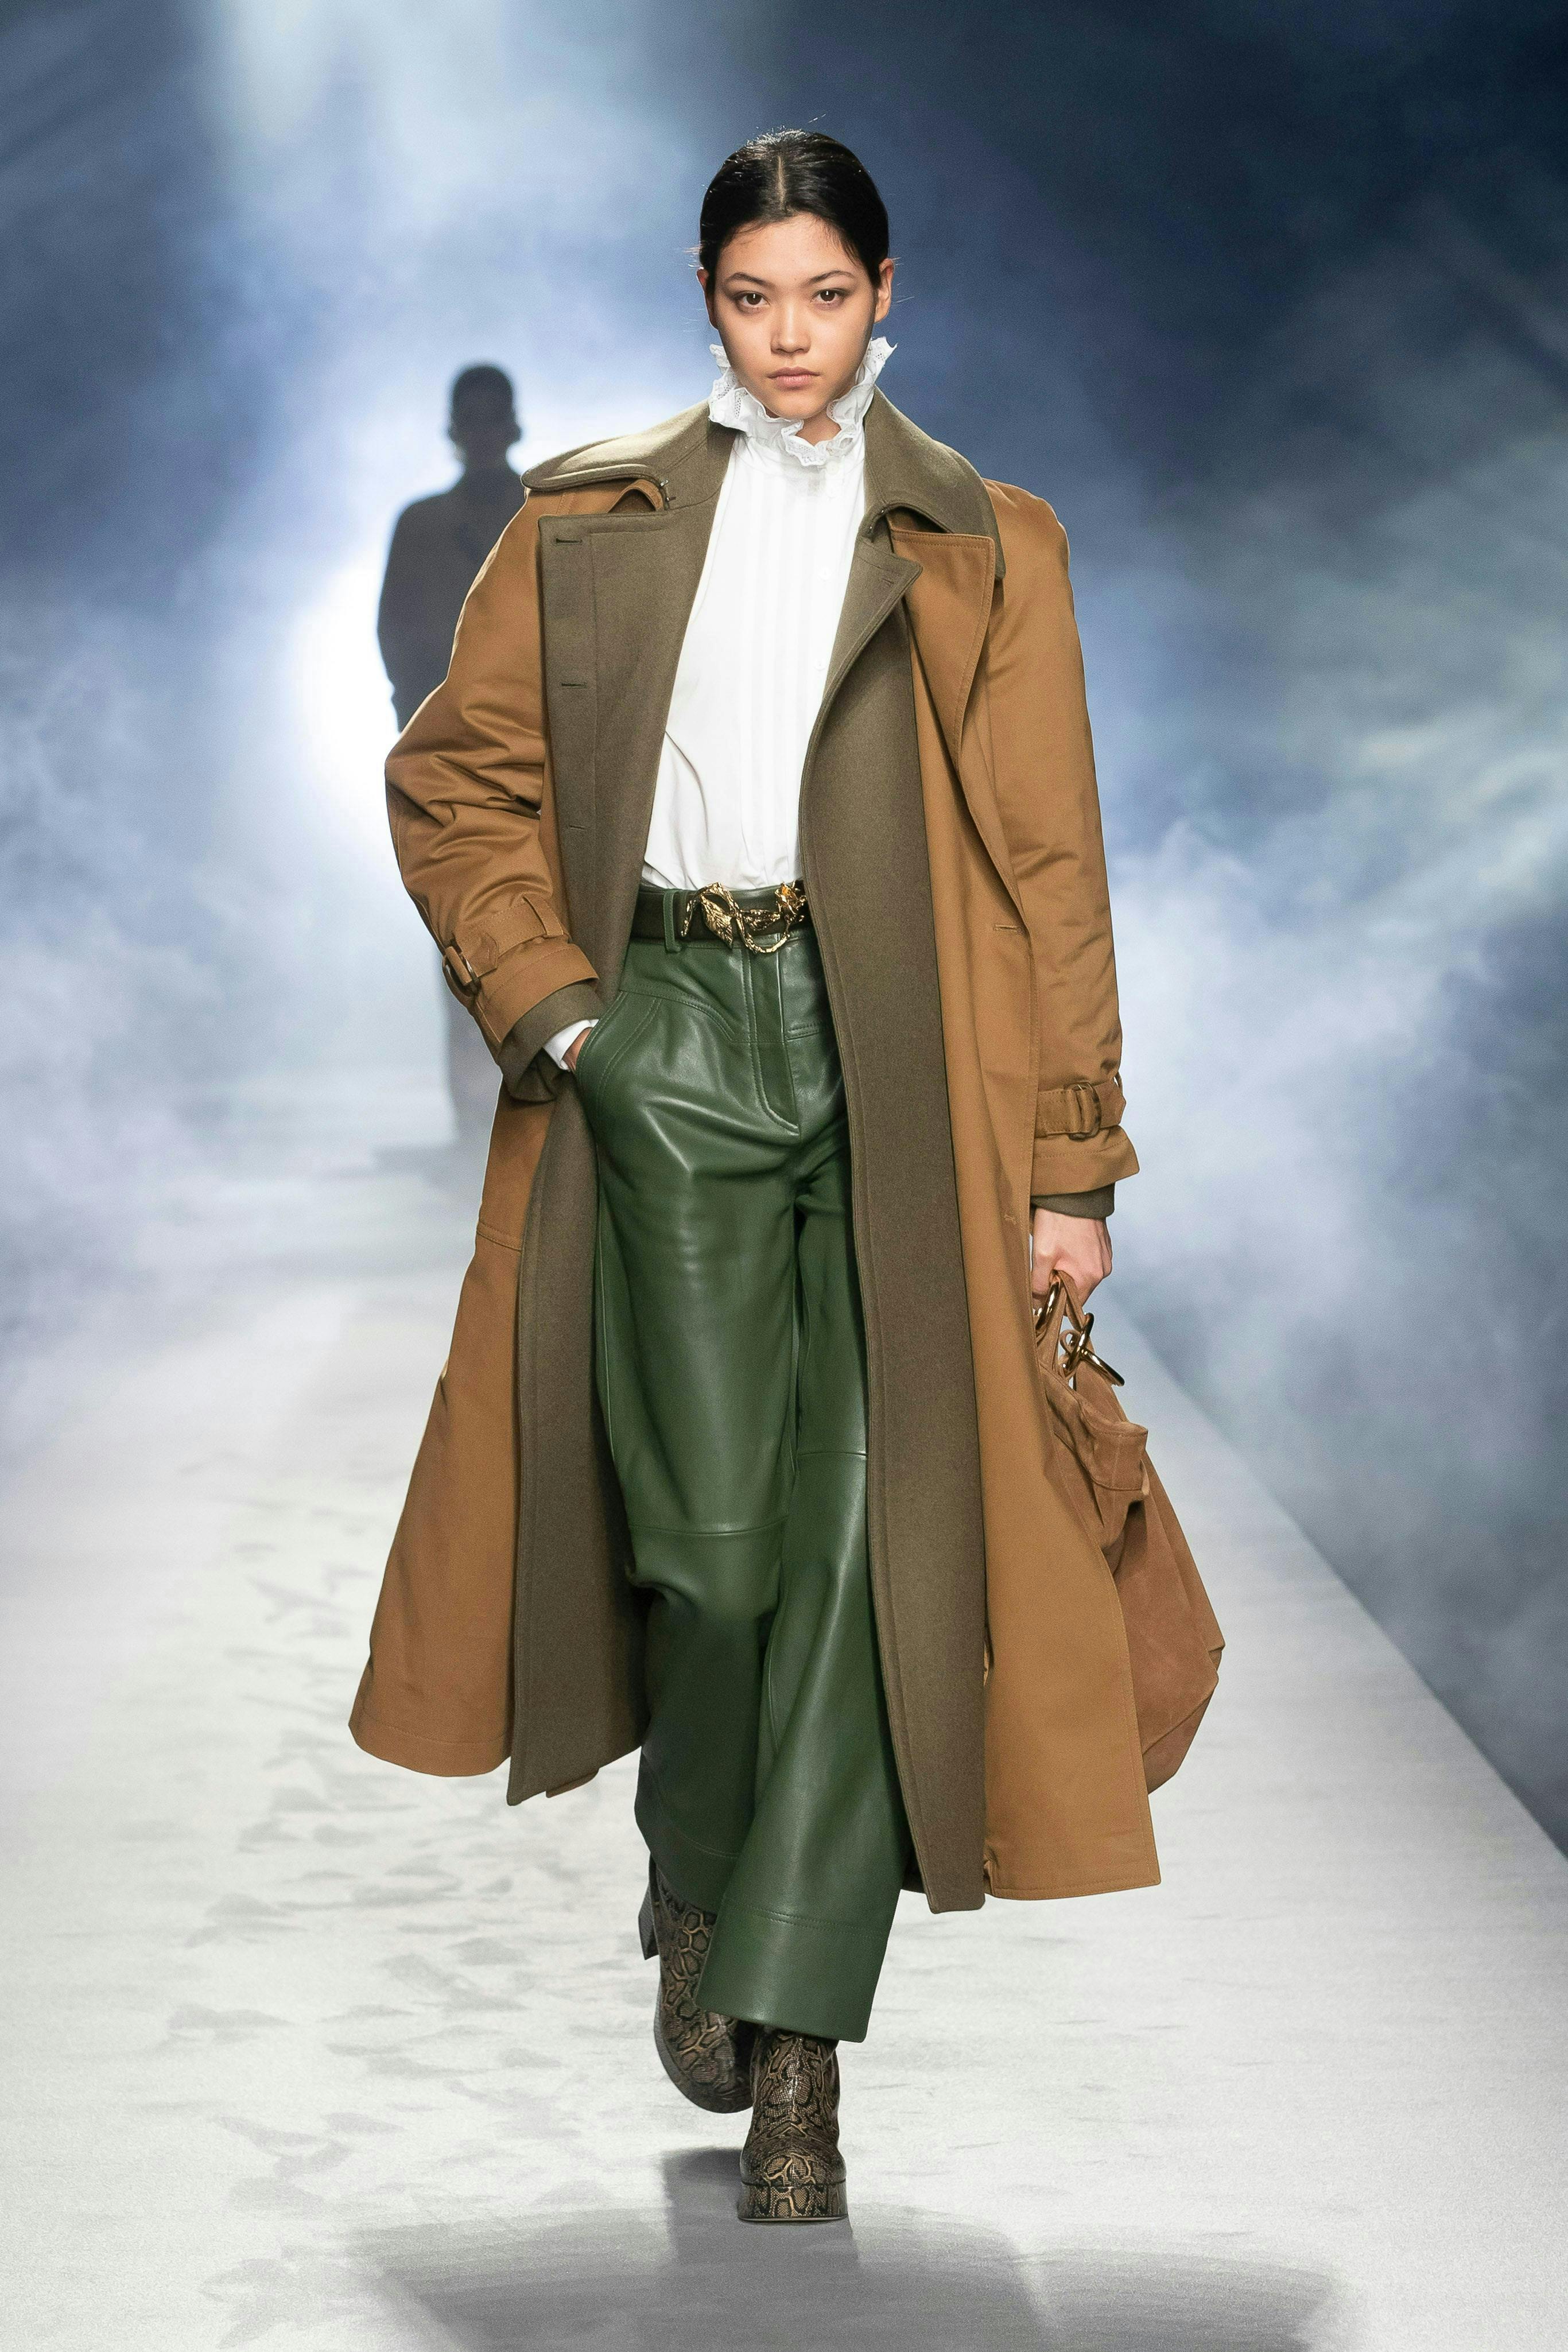 clothing apparel overcoat coat person human trench coat